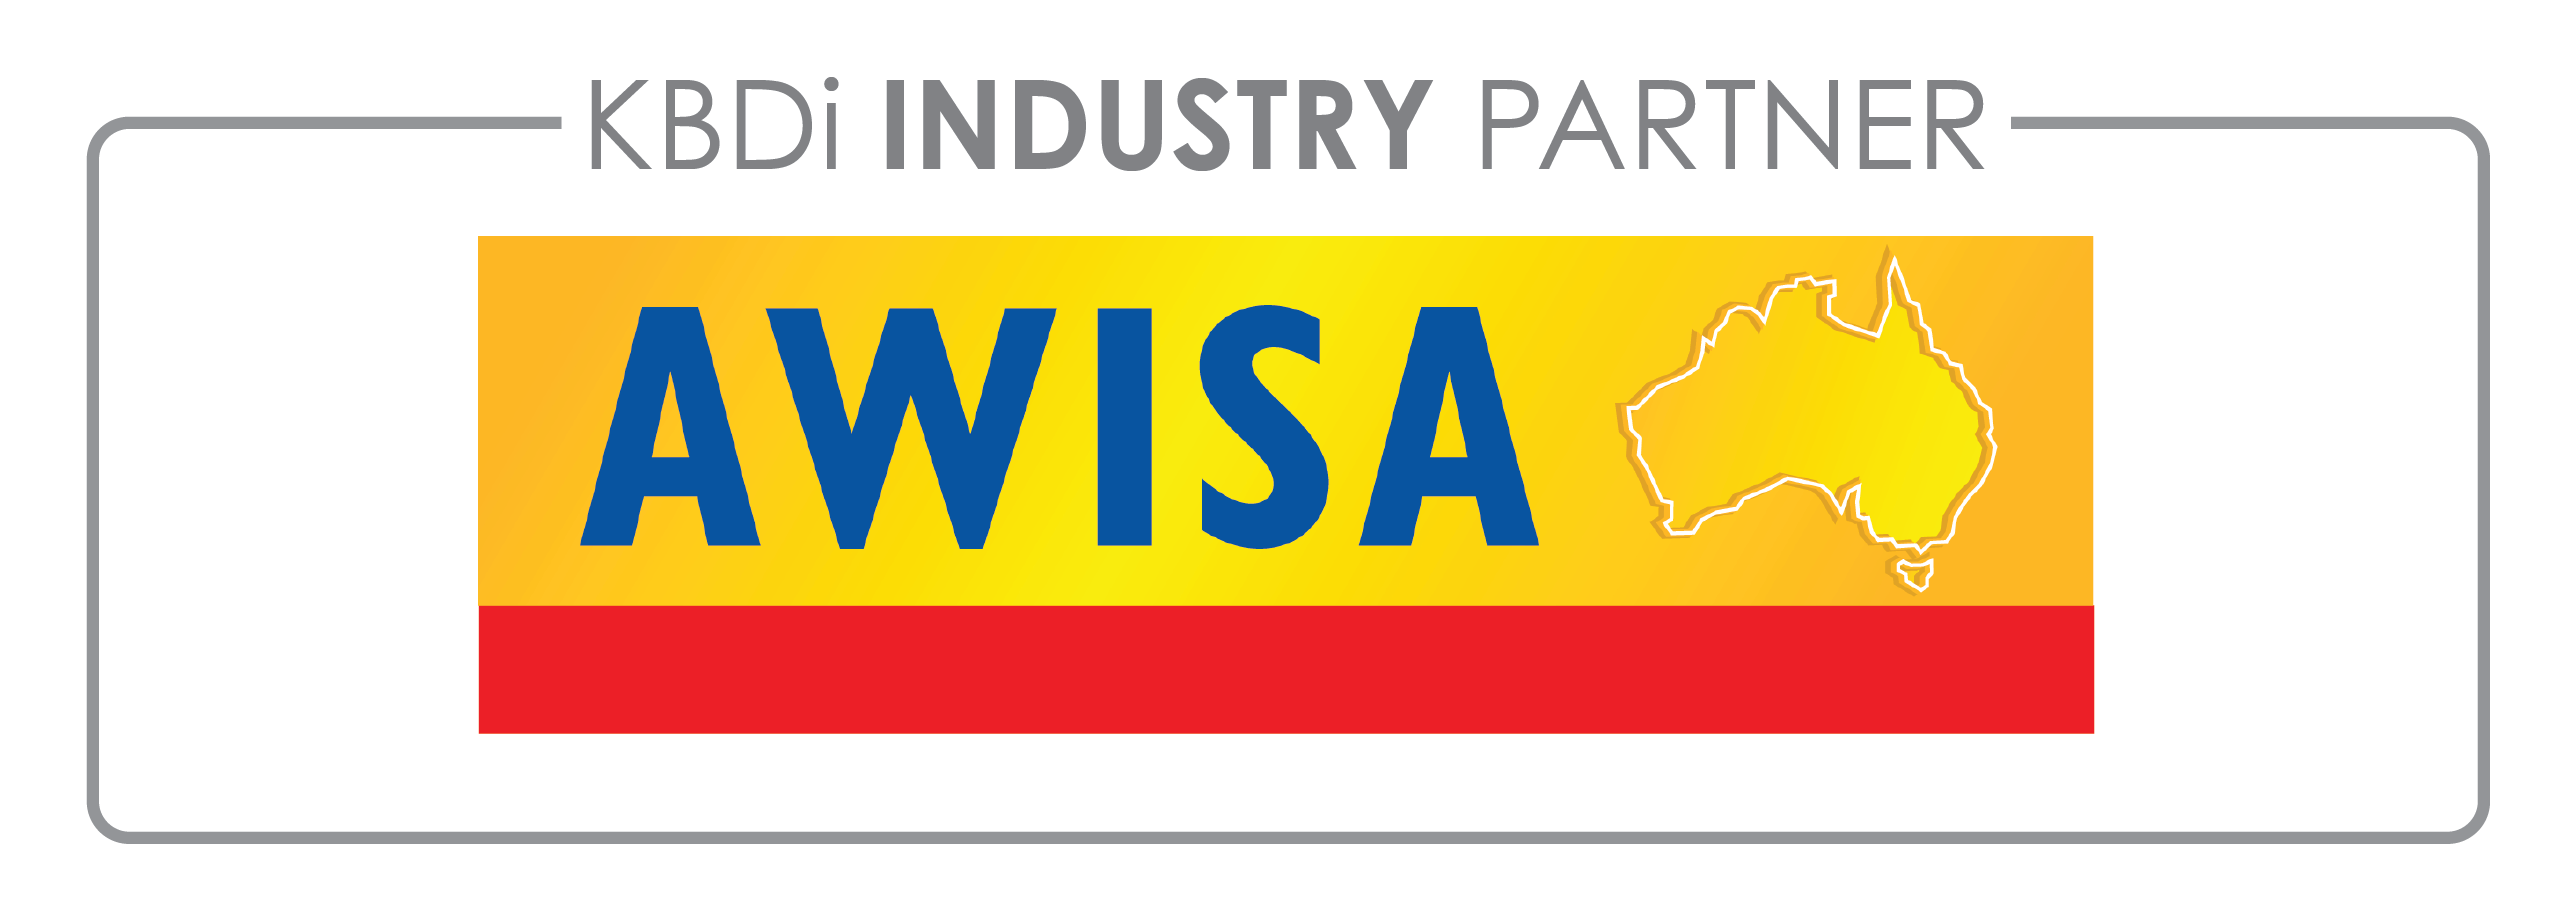 KBDi Industry Partner AWISA